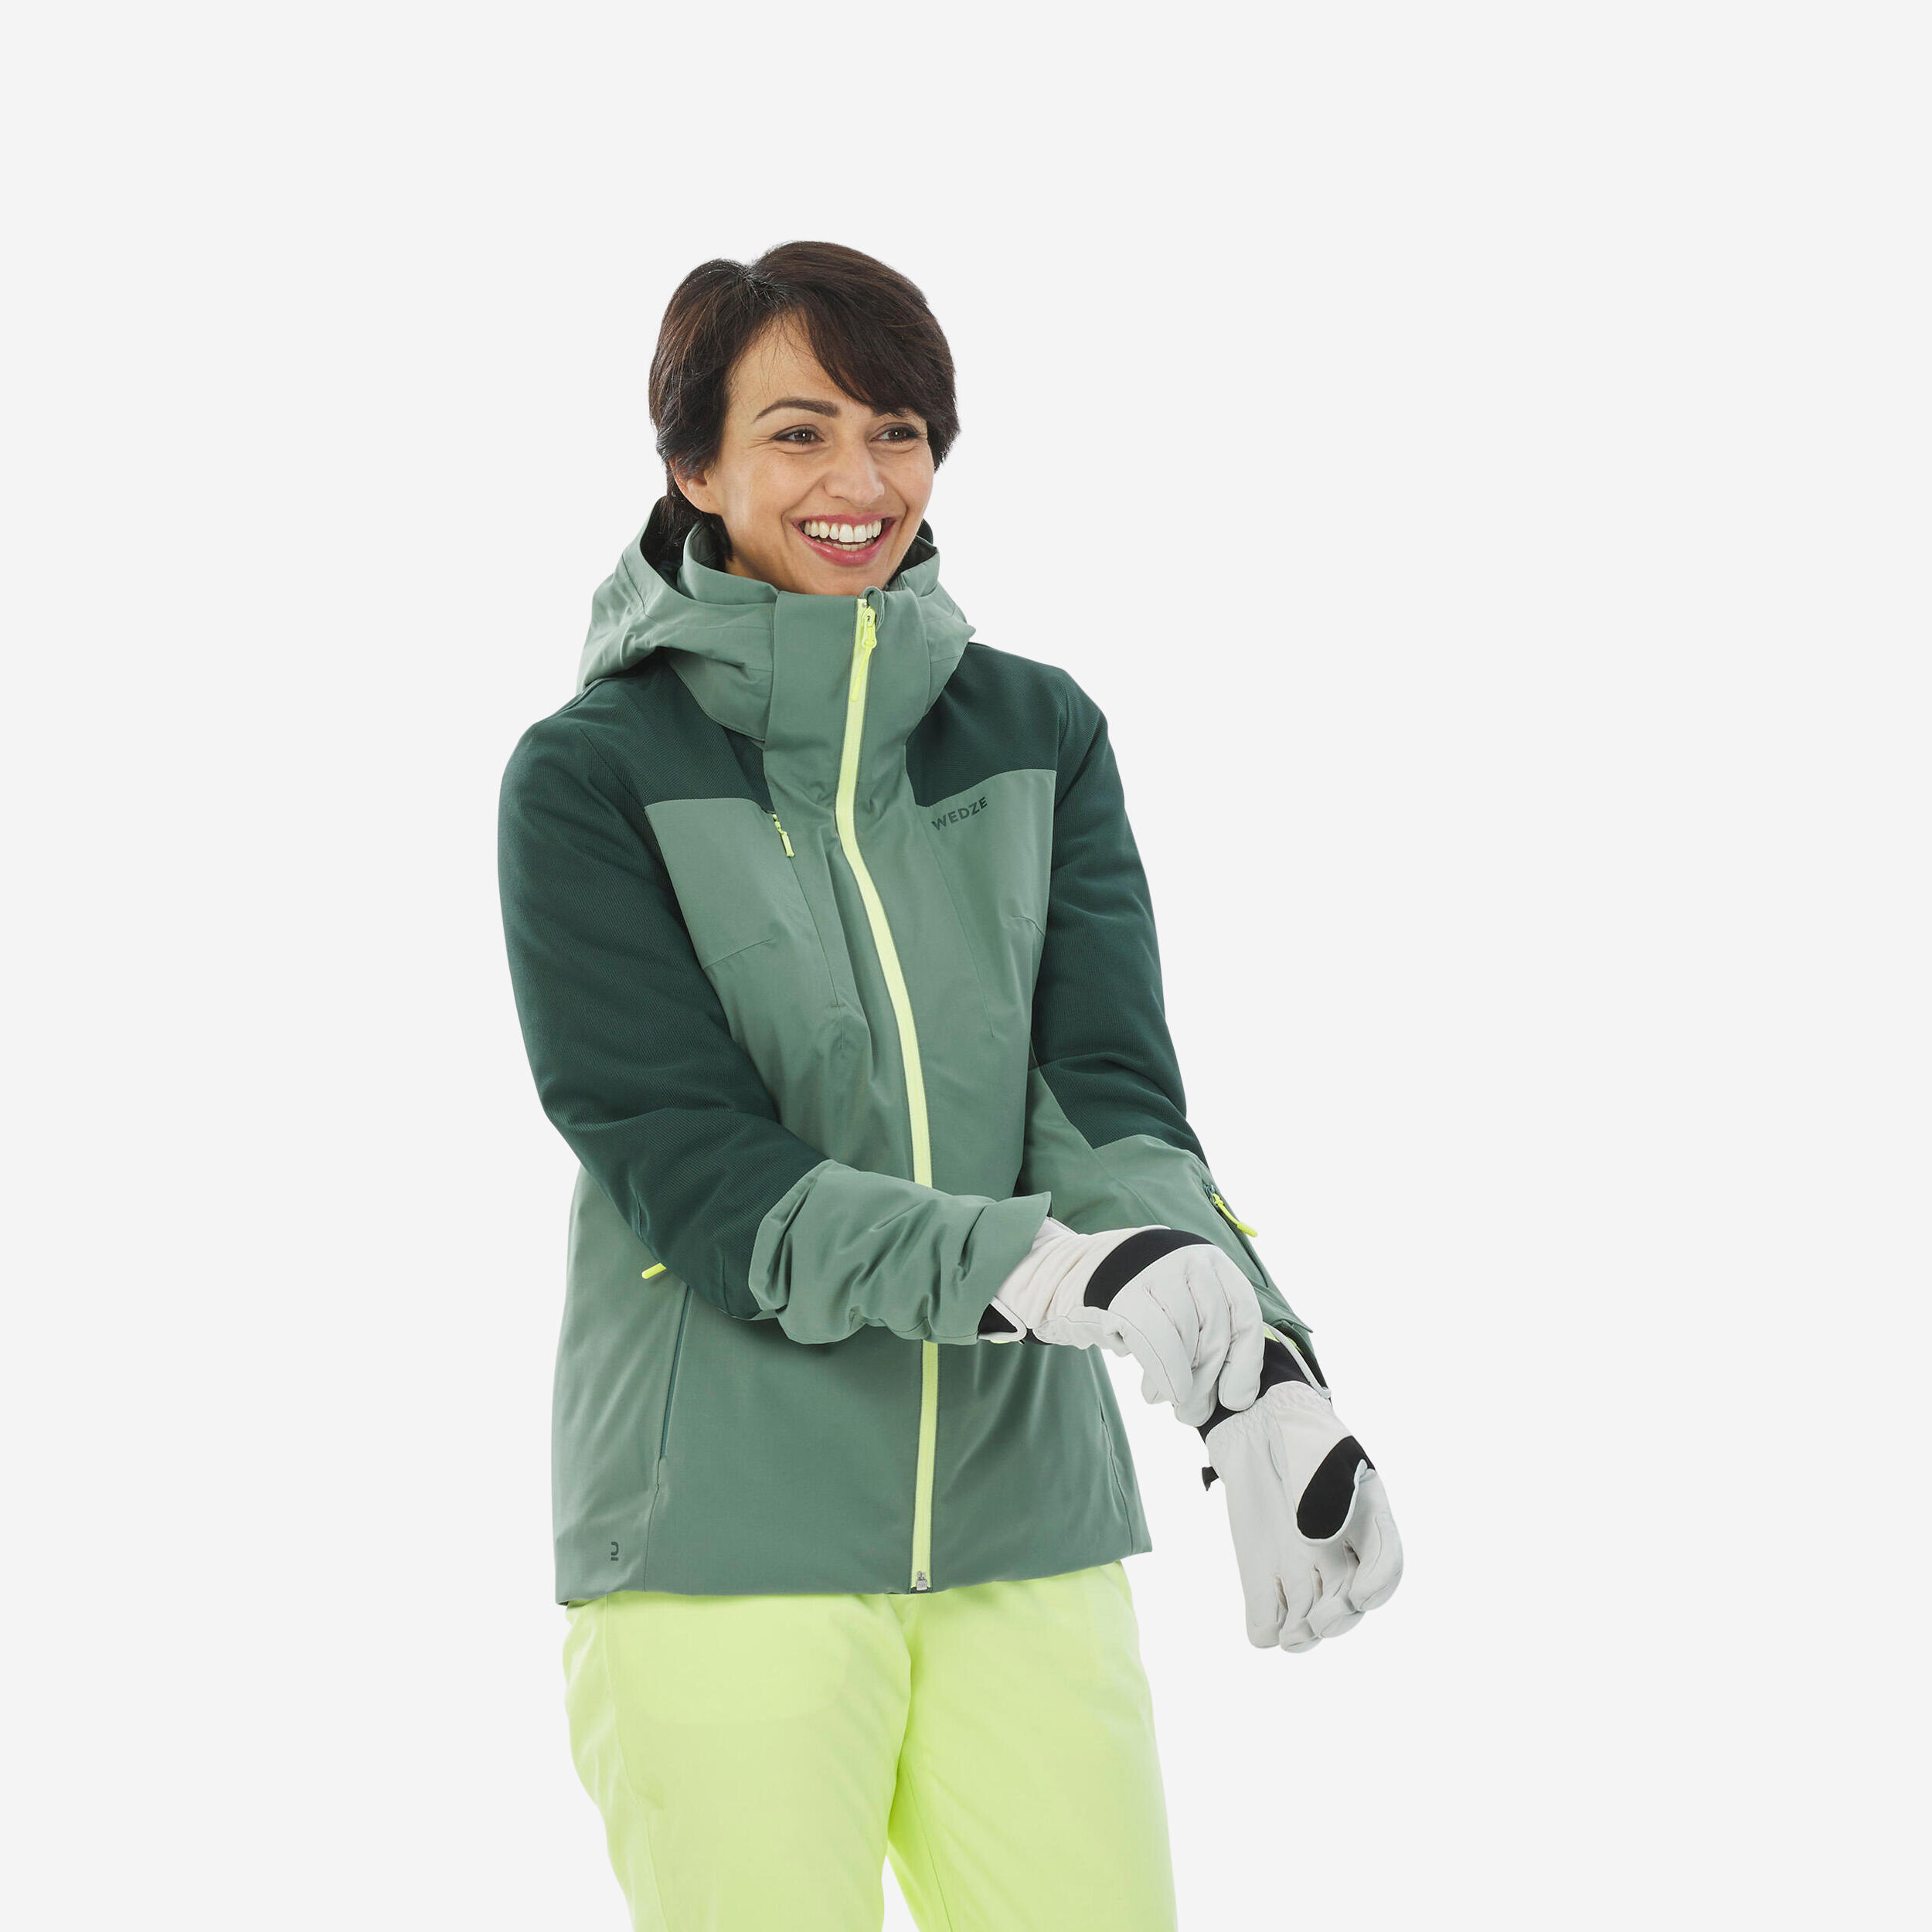 WEDZE Women’s Ski Jacket - 500 sport - Green